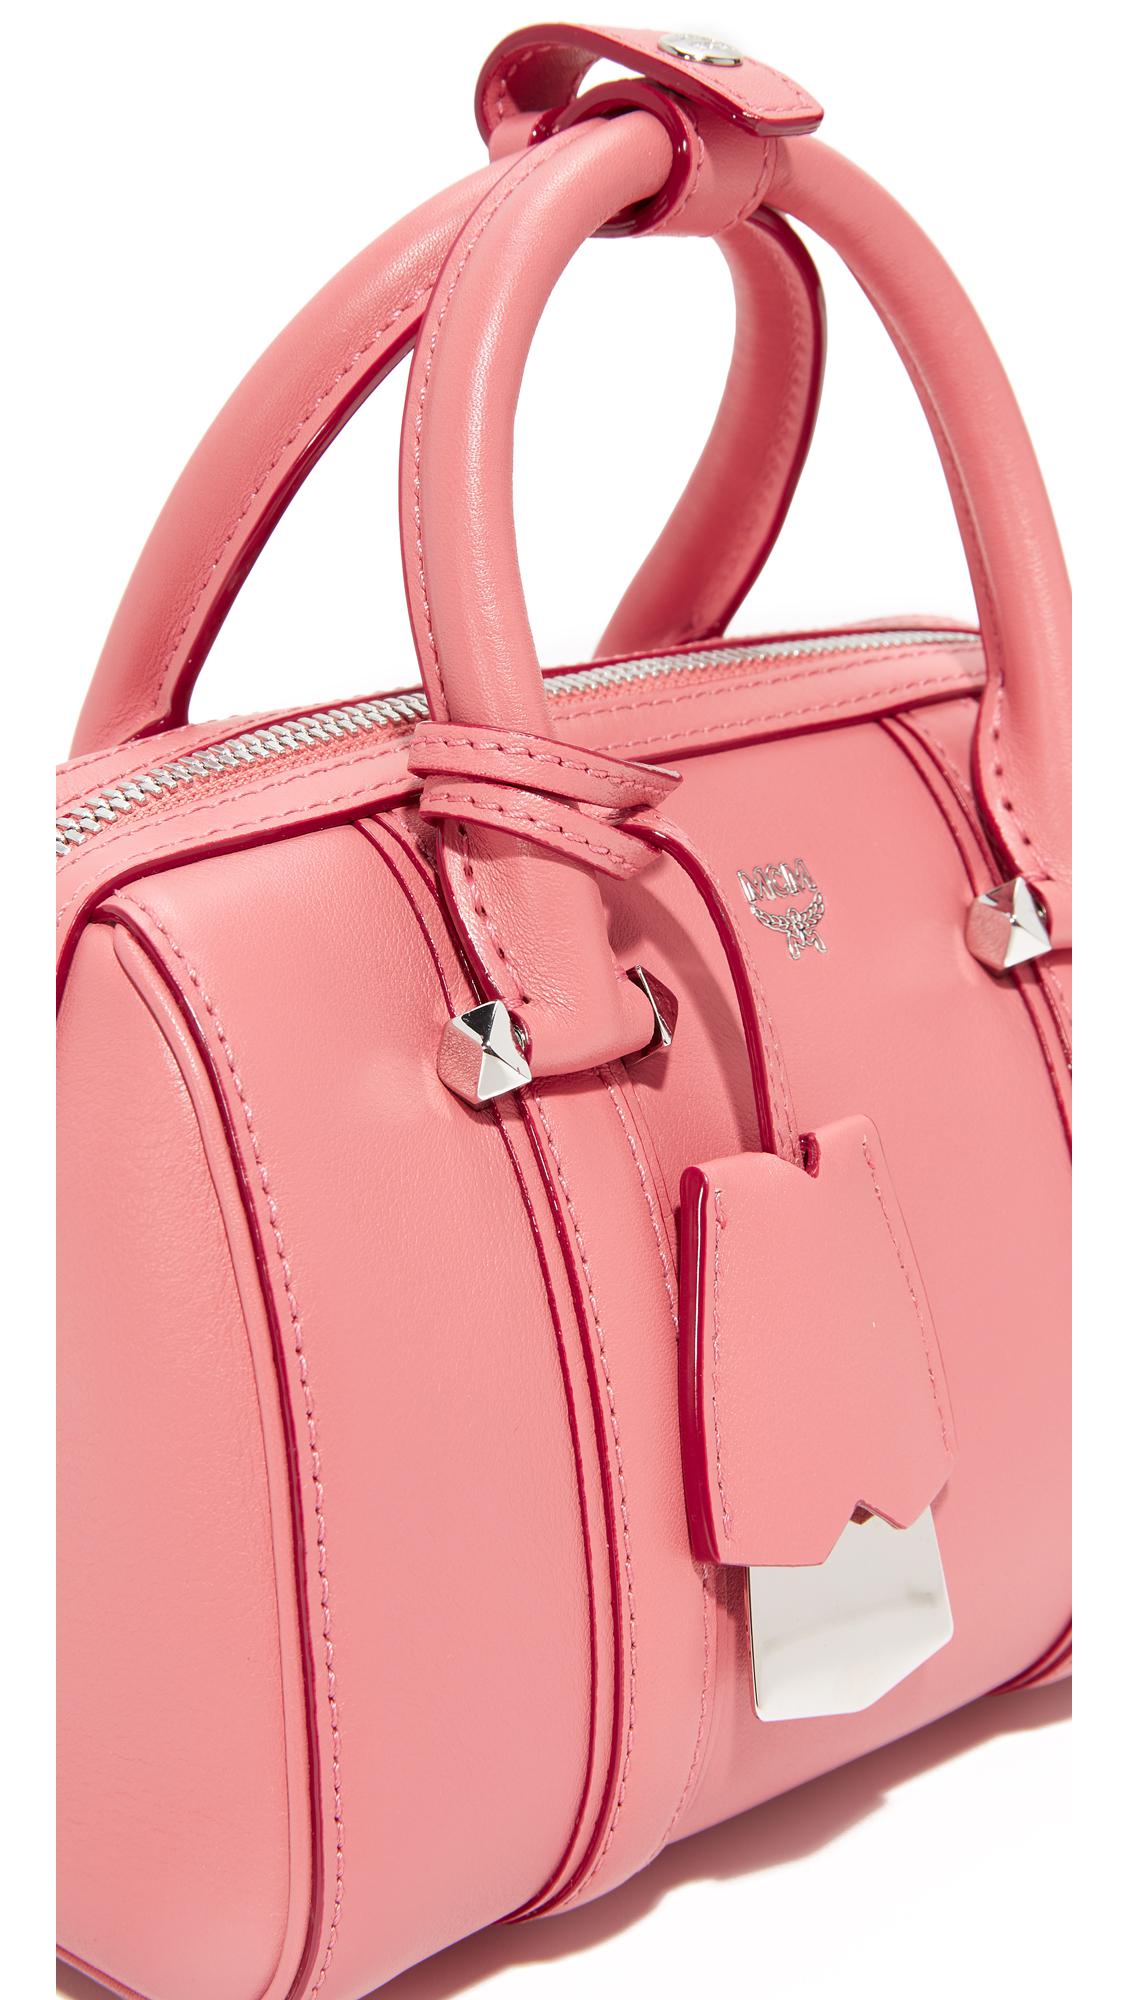 MCM Leather Mini Boston Bag in Coral Blush (Pink) - Lyst